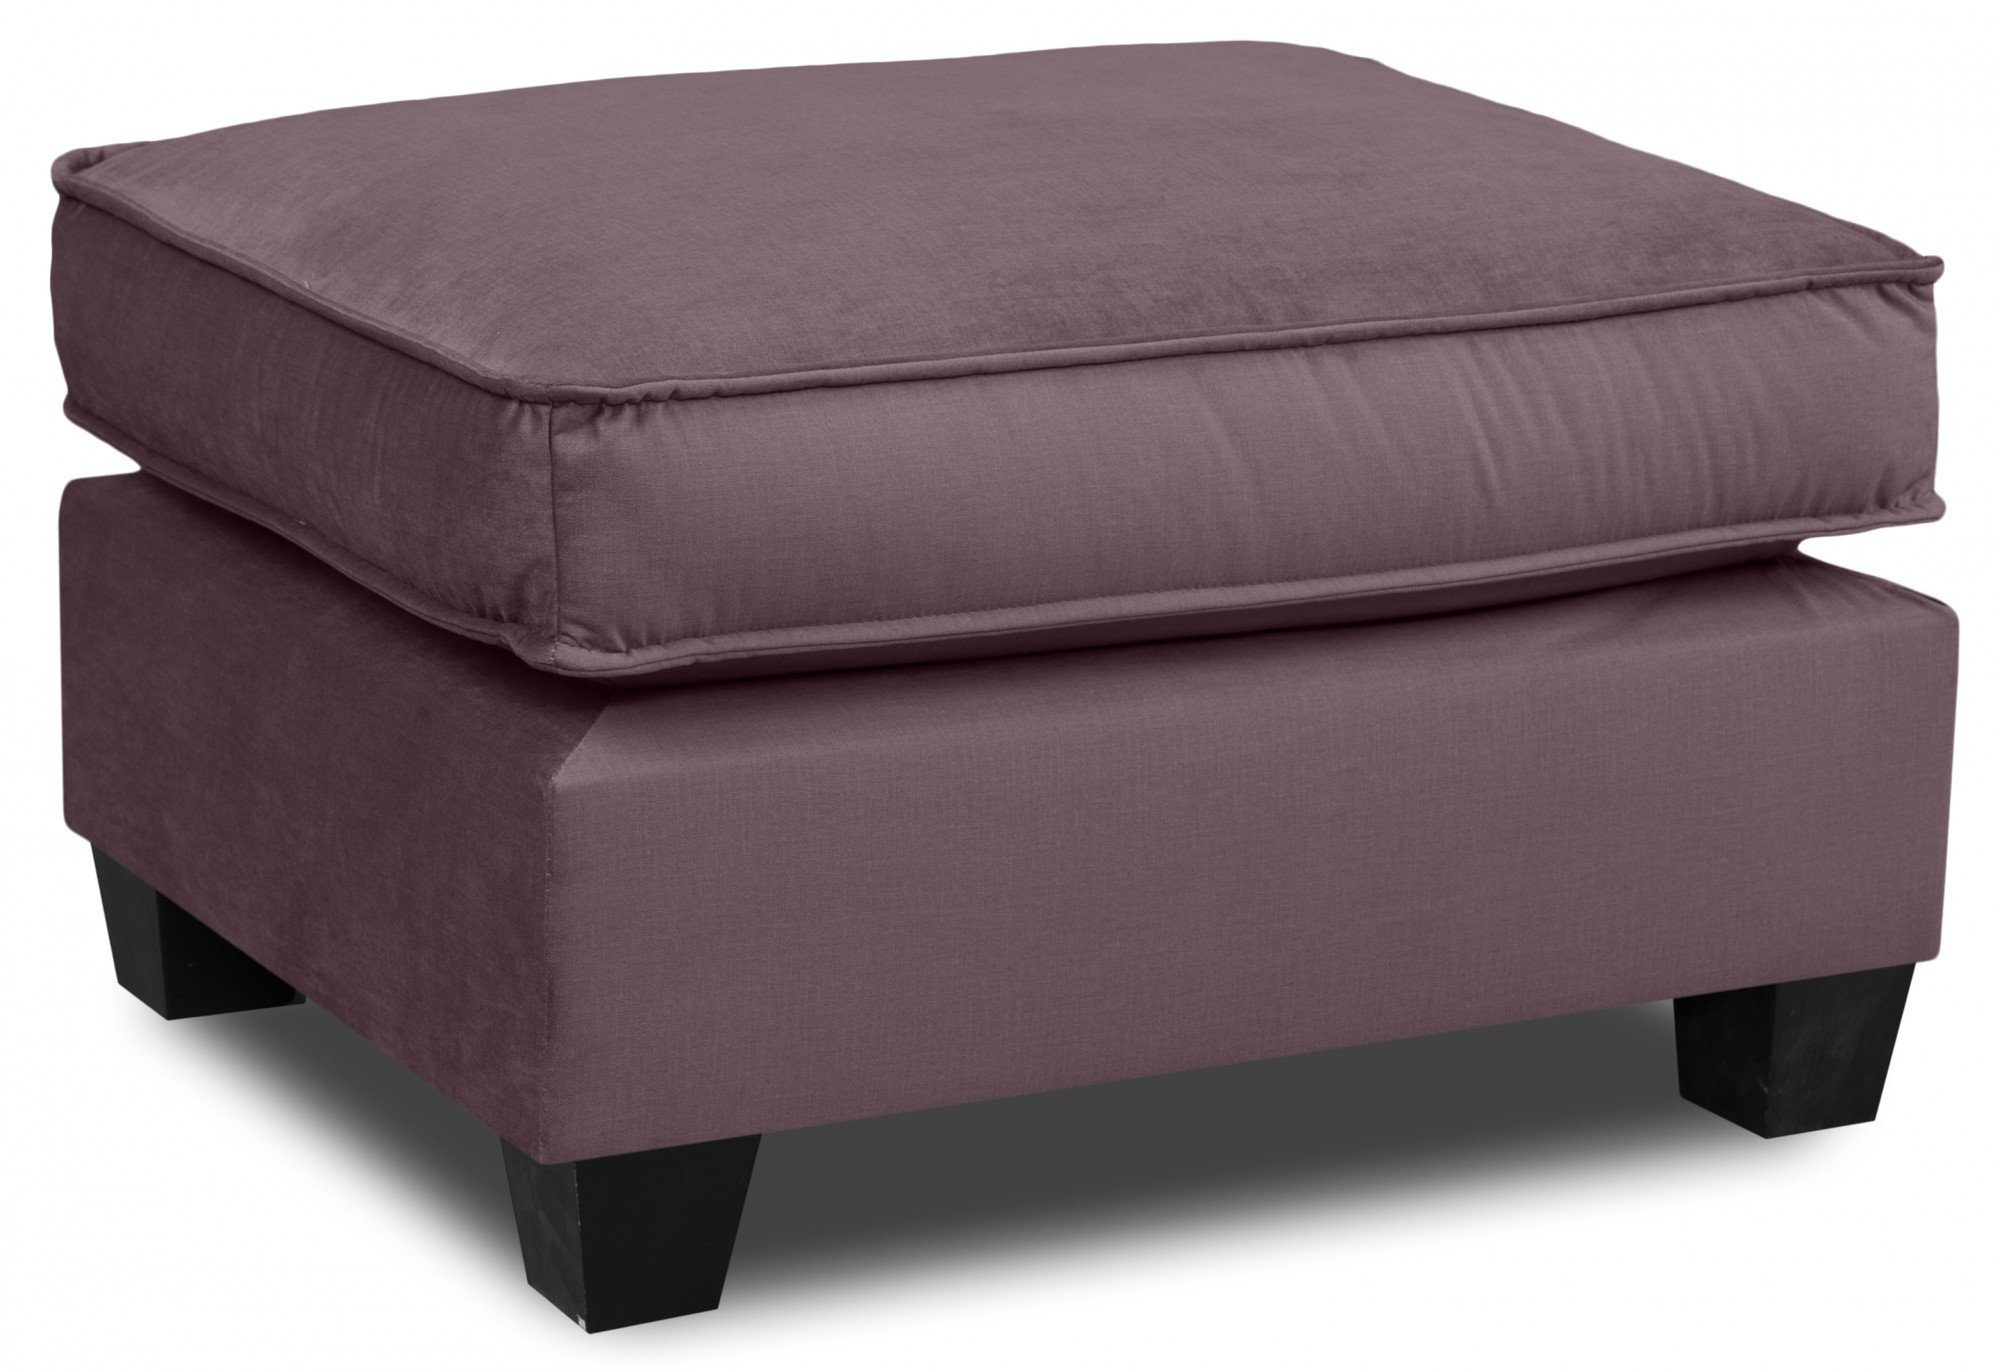 affaire pink Home Tilques, bequeme Polsterhocker Sitzgelegenheiten, Farben verfügbar viele violet